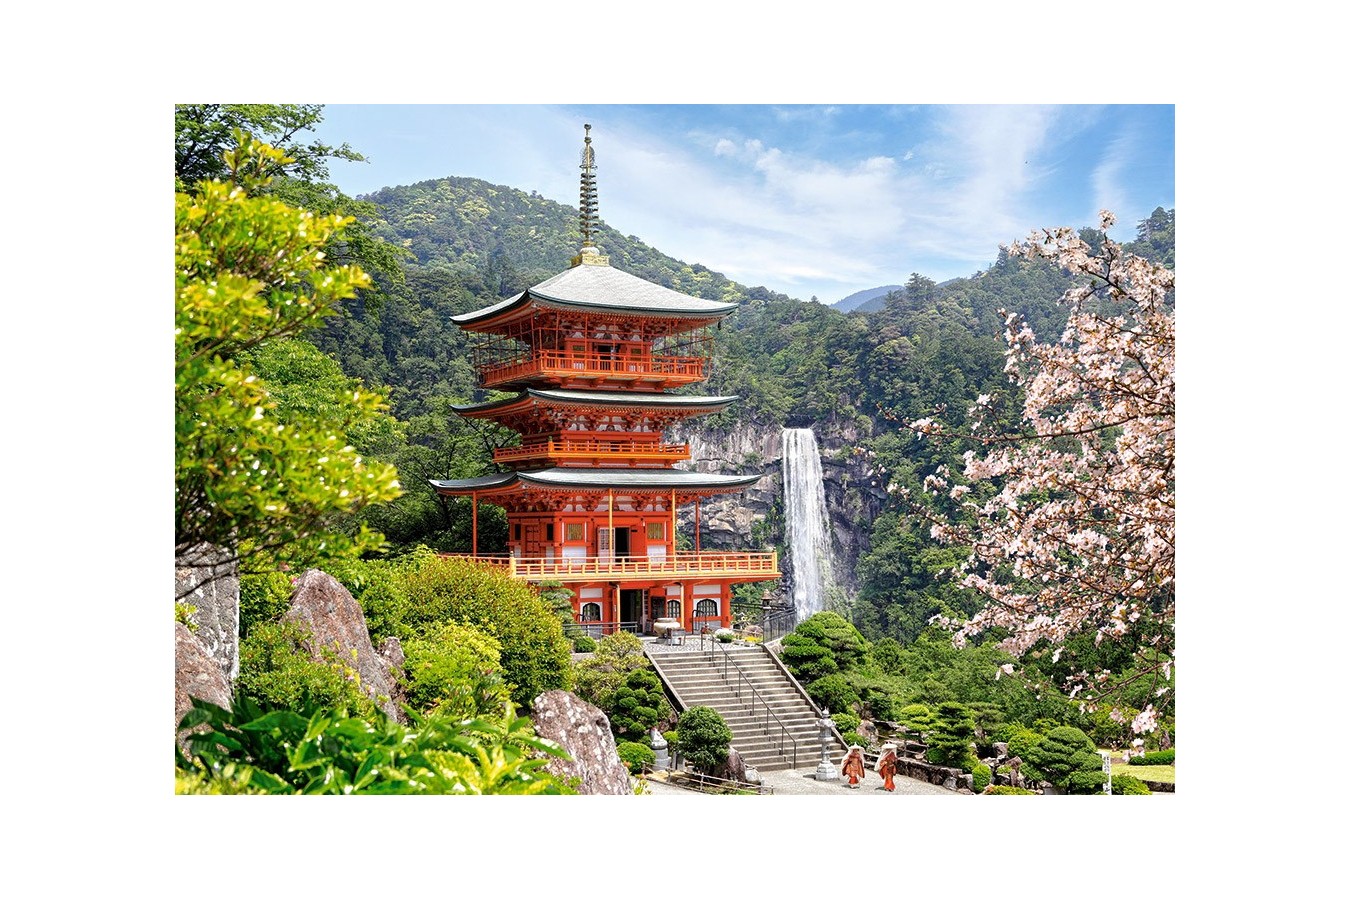 Puzzle Castorland - Seiganto-ji Temple Japan, 1000 piese